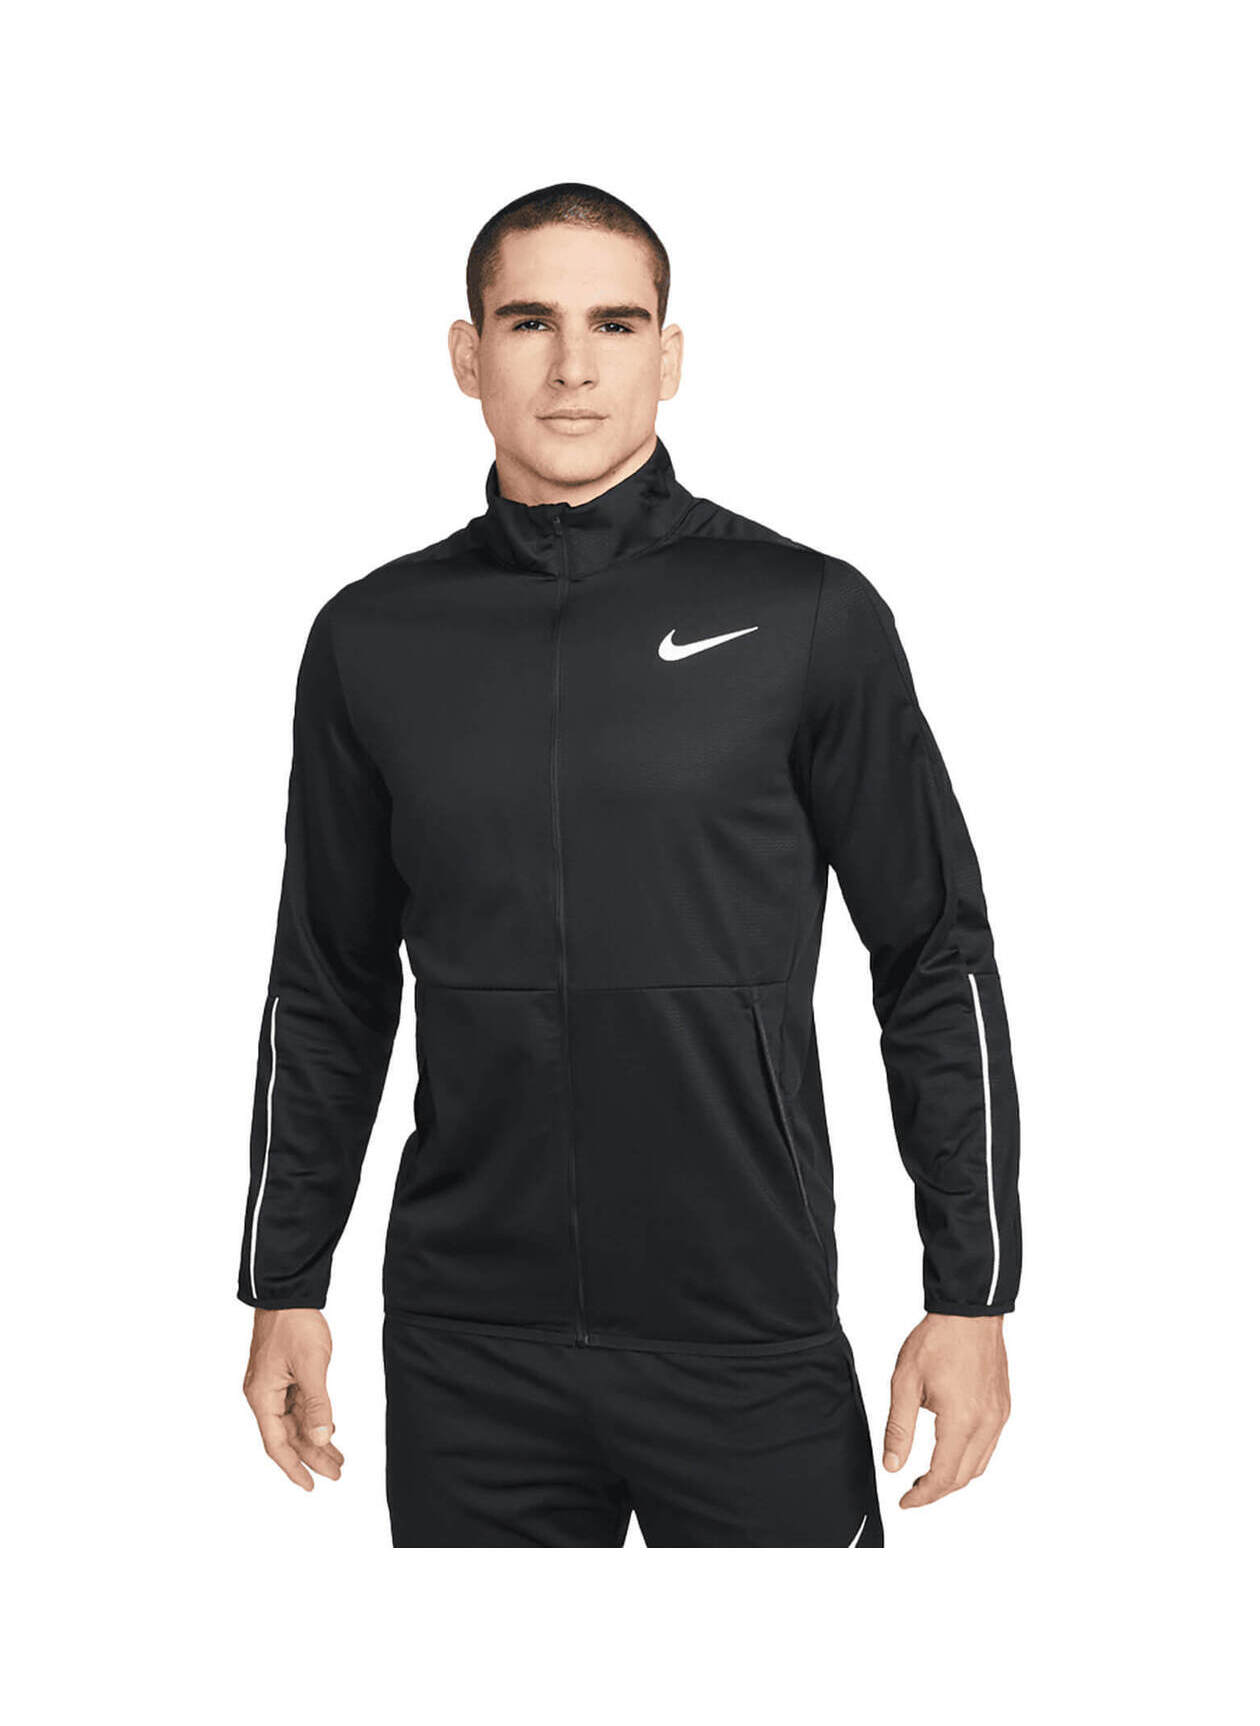 Nike Men's Black/White/White Dri-FIT Epic Jacket